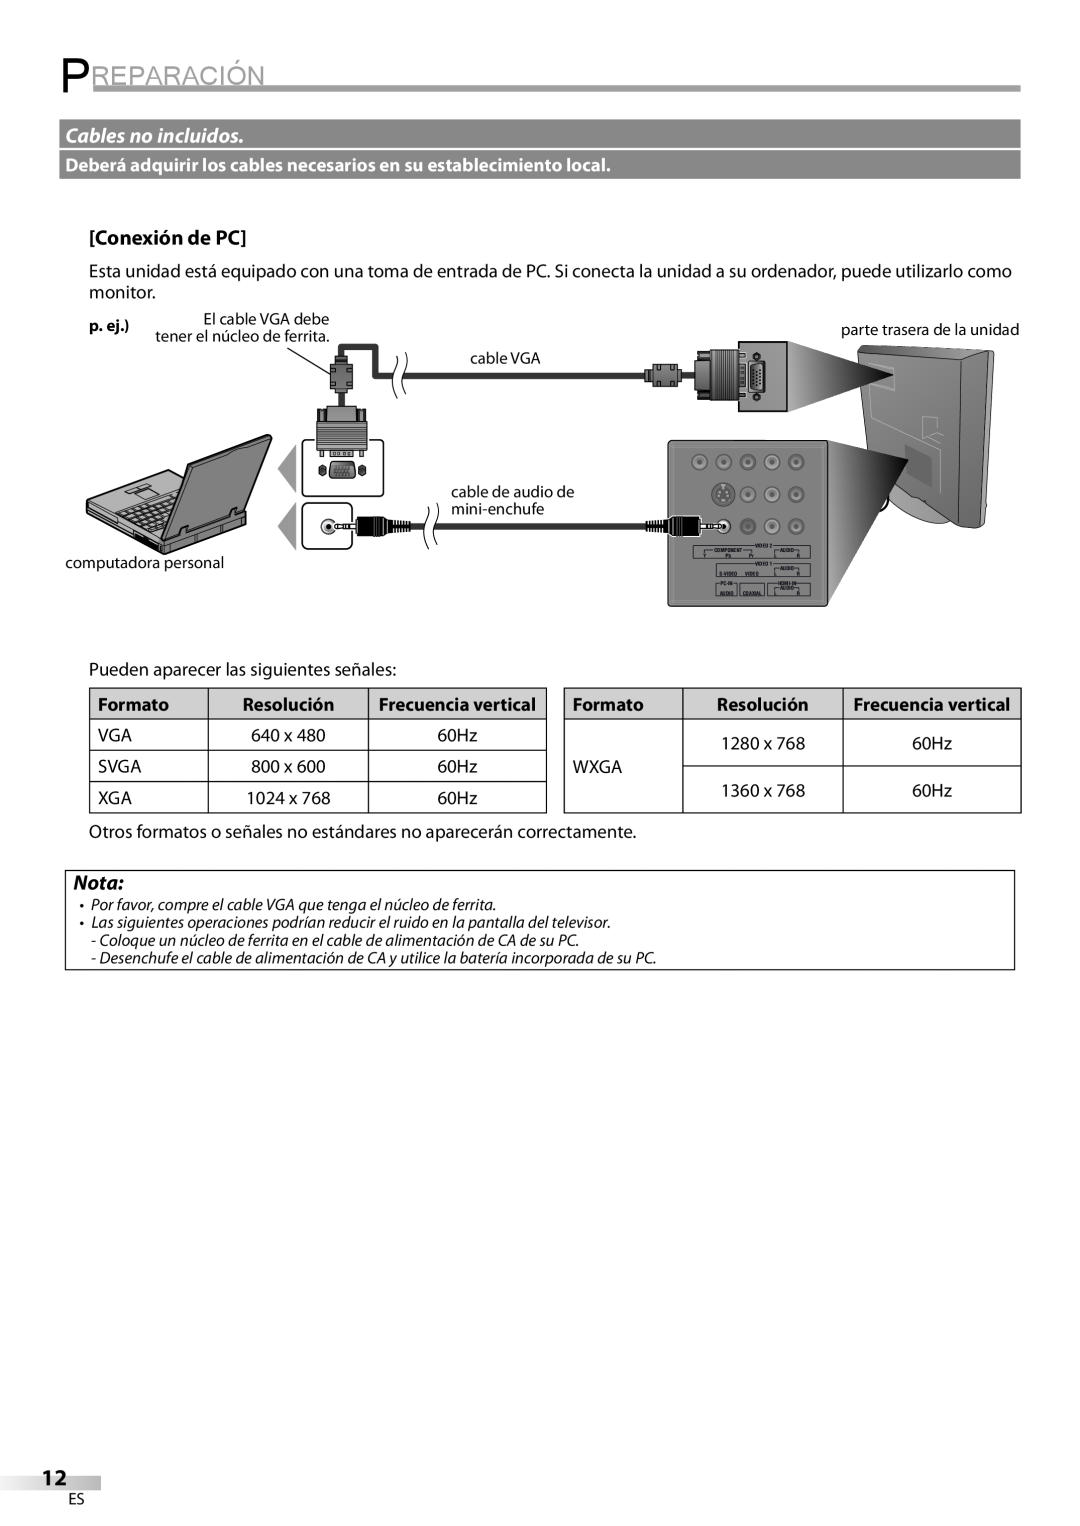 Sylvania LC225SC9 owner manual Preparación, Cables no incluidos, Conexión de PC, Nota, p. ej, Frecuencia vertical 